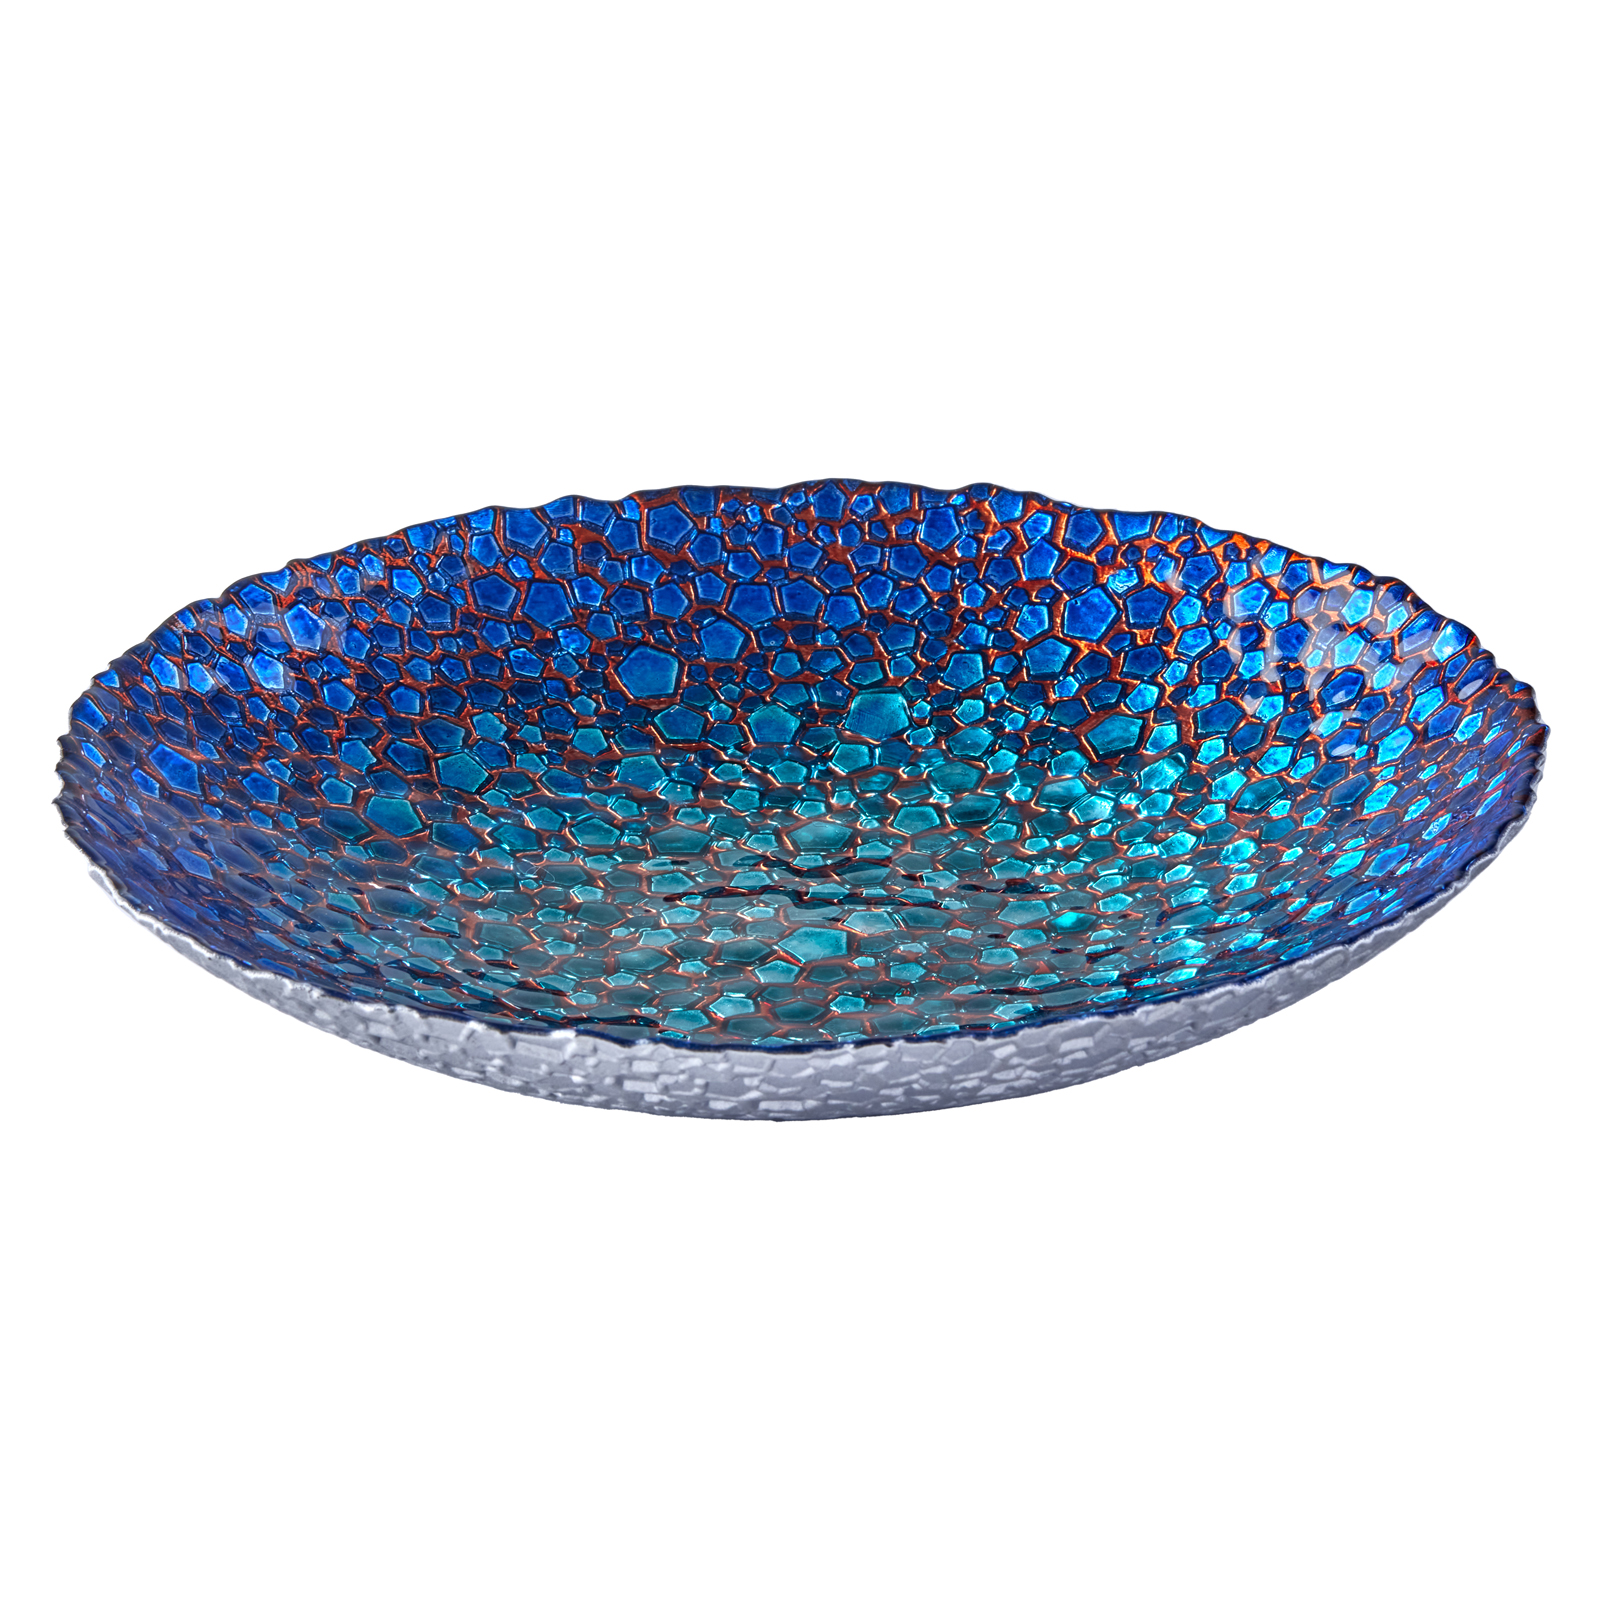 Anton Studio Designs Mosaic Bowl